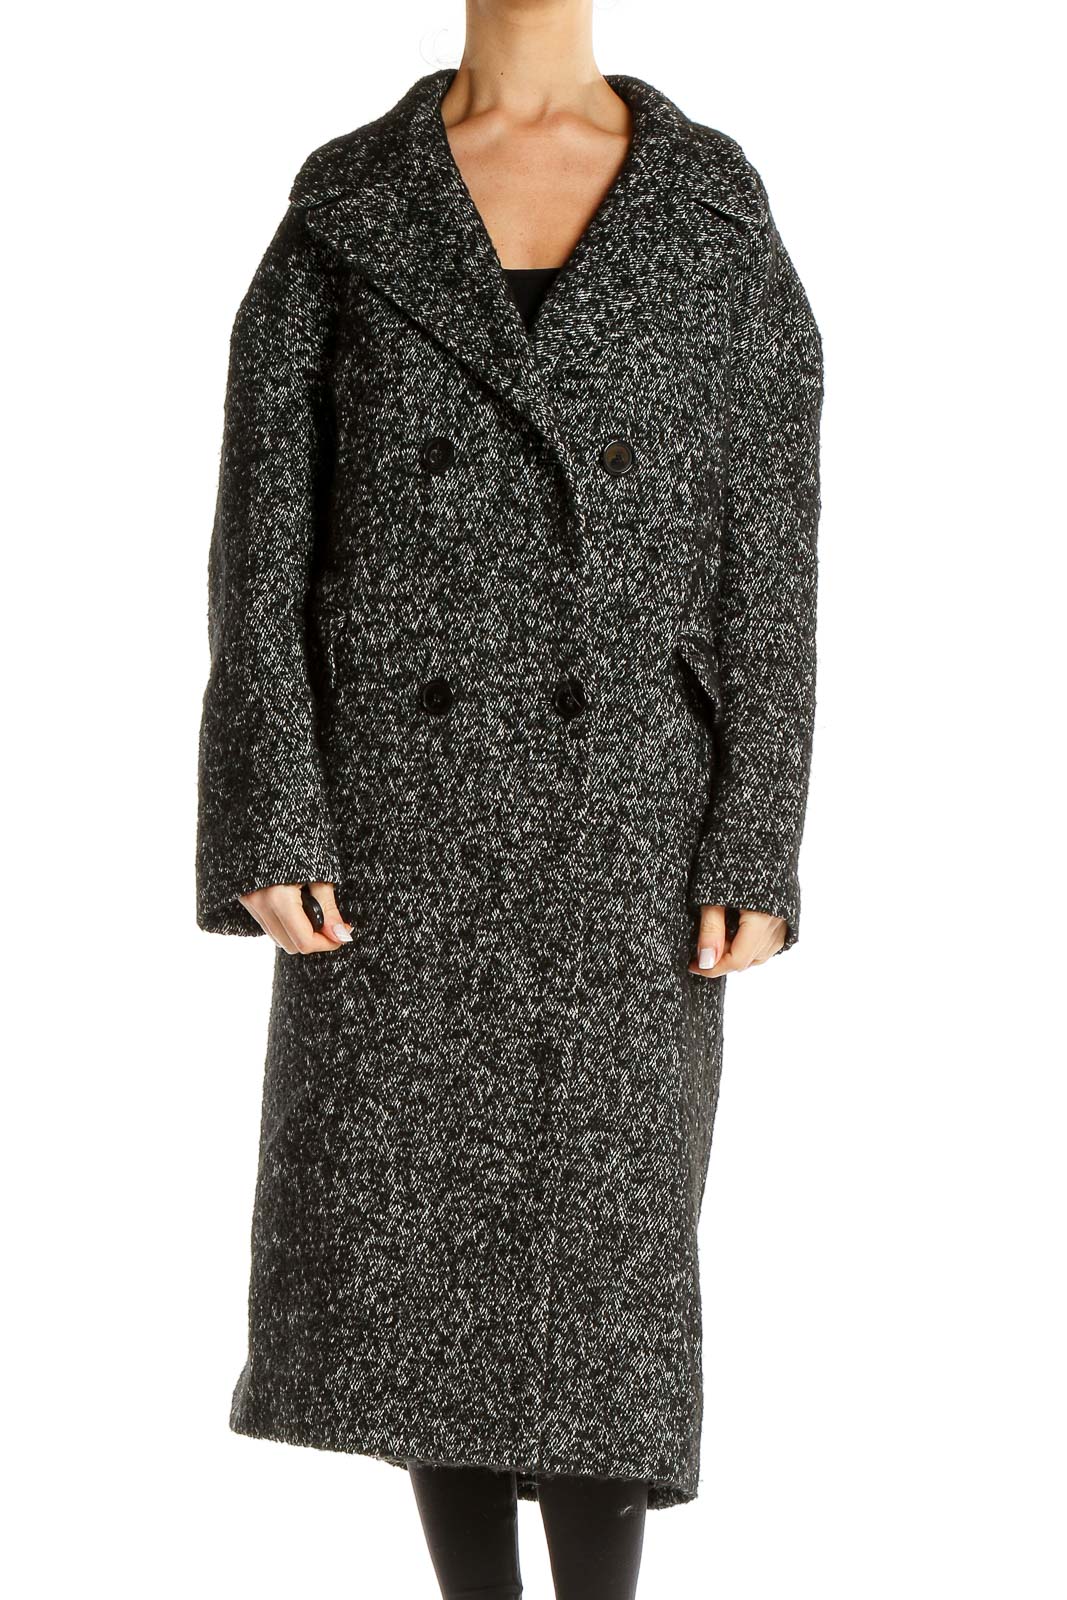 Black Heather Coat Front